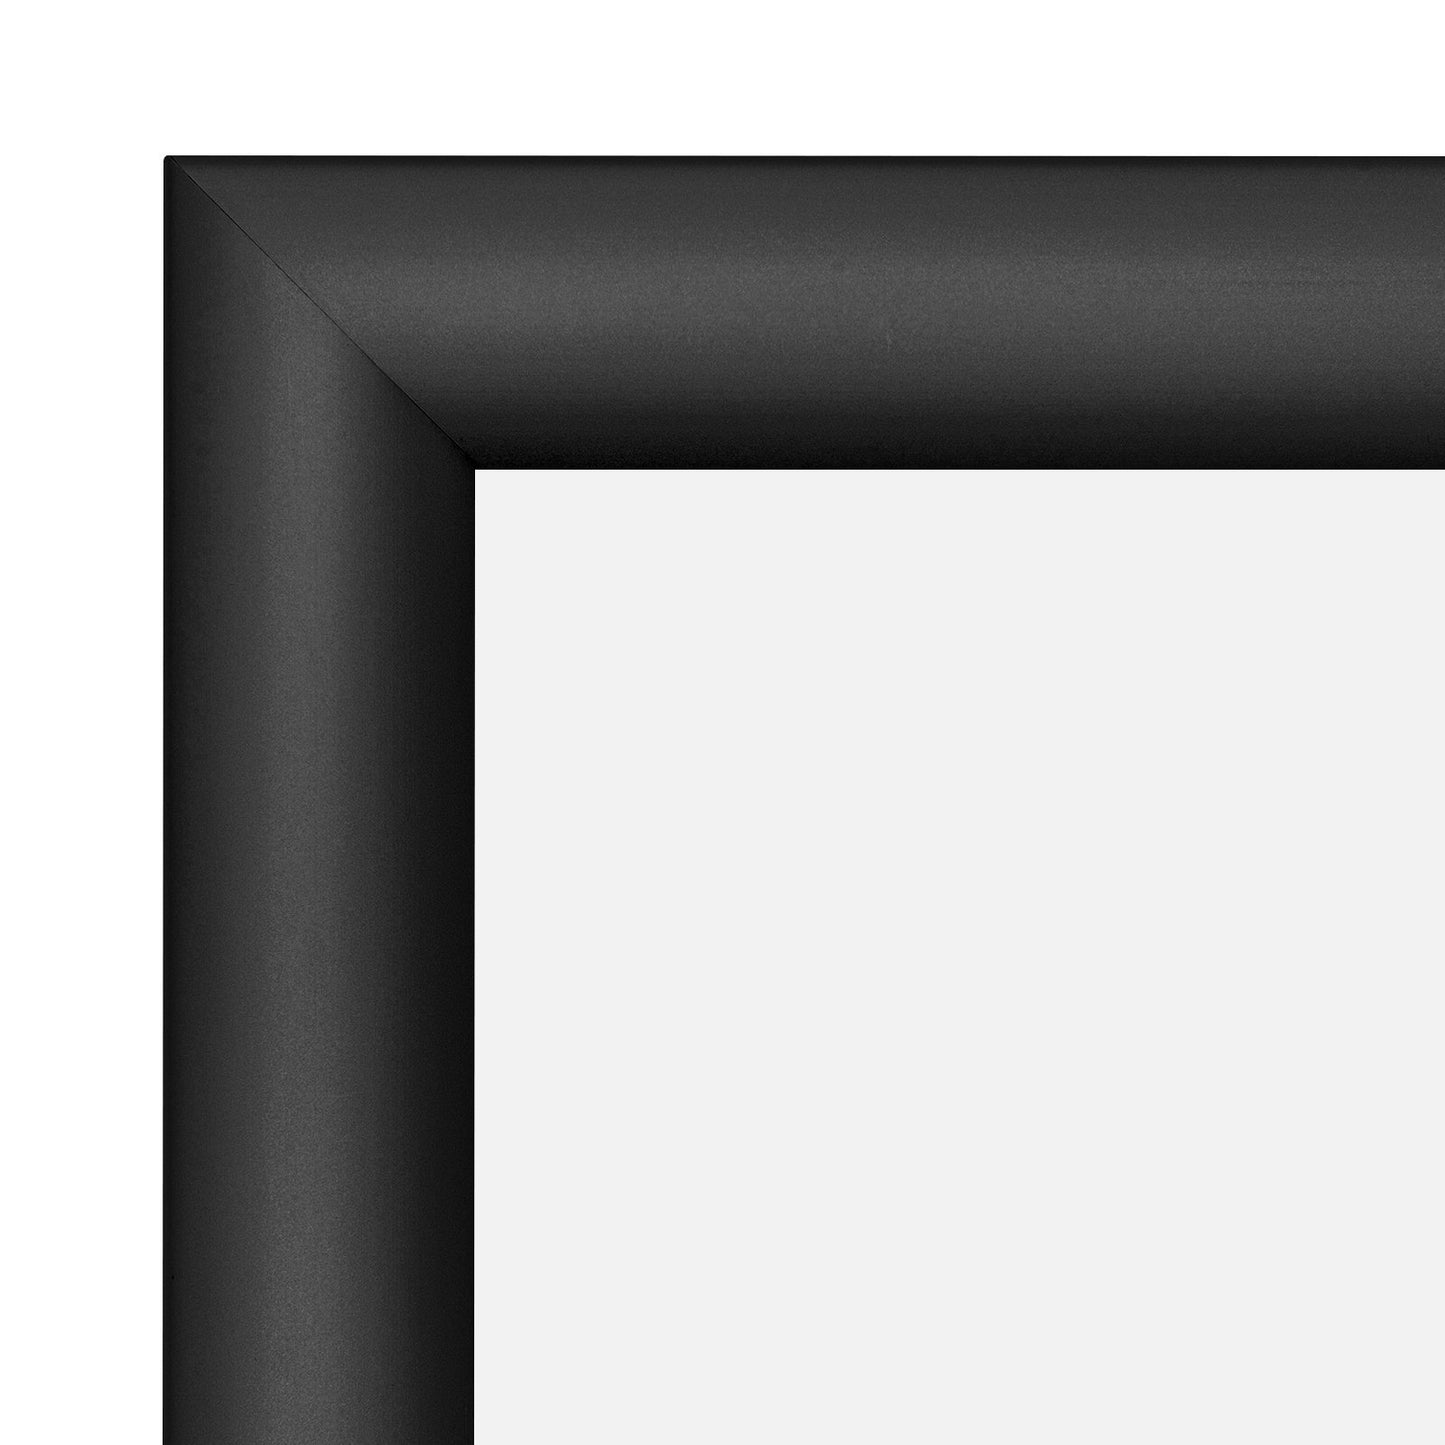 A4 (29.7 x 21 cm) Black Snap Frame - 25MM Profile